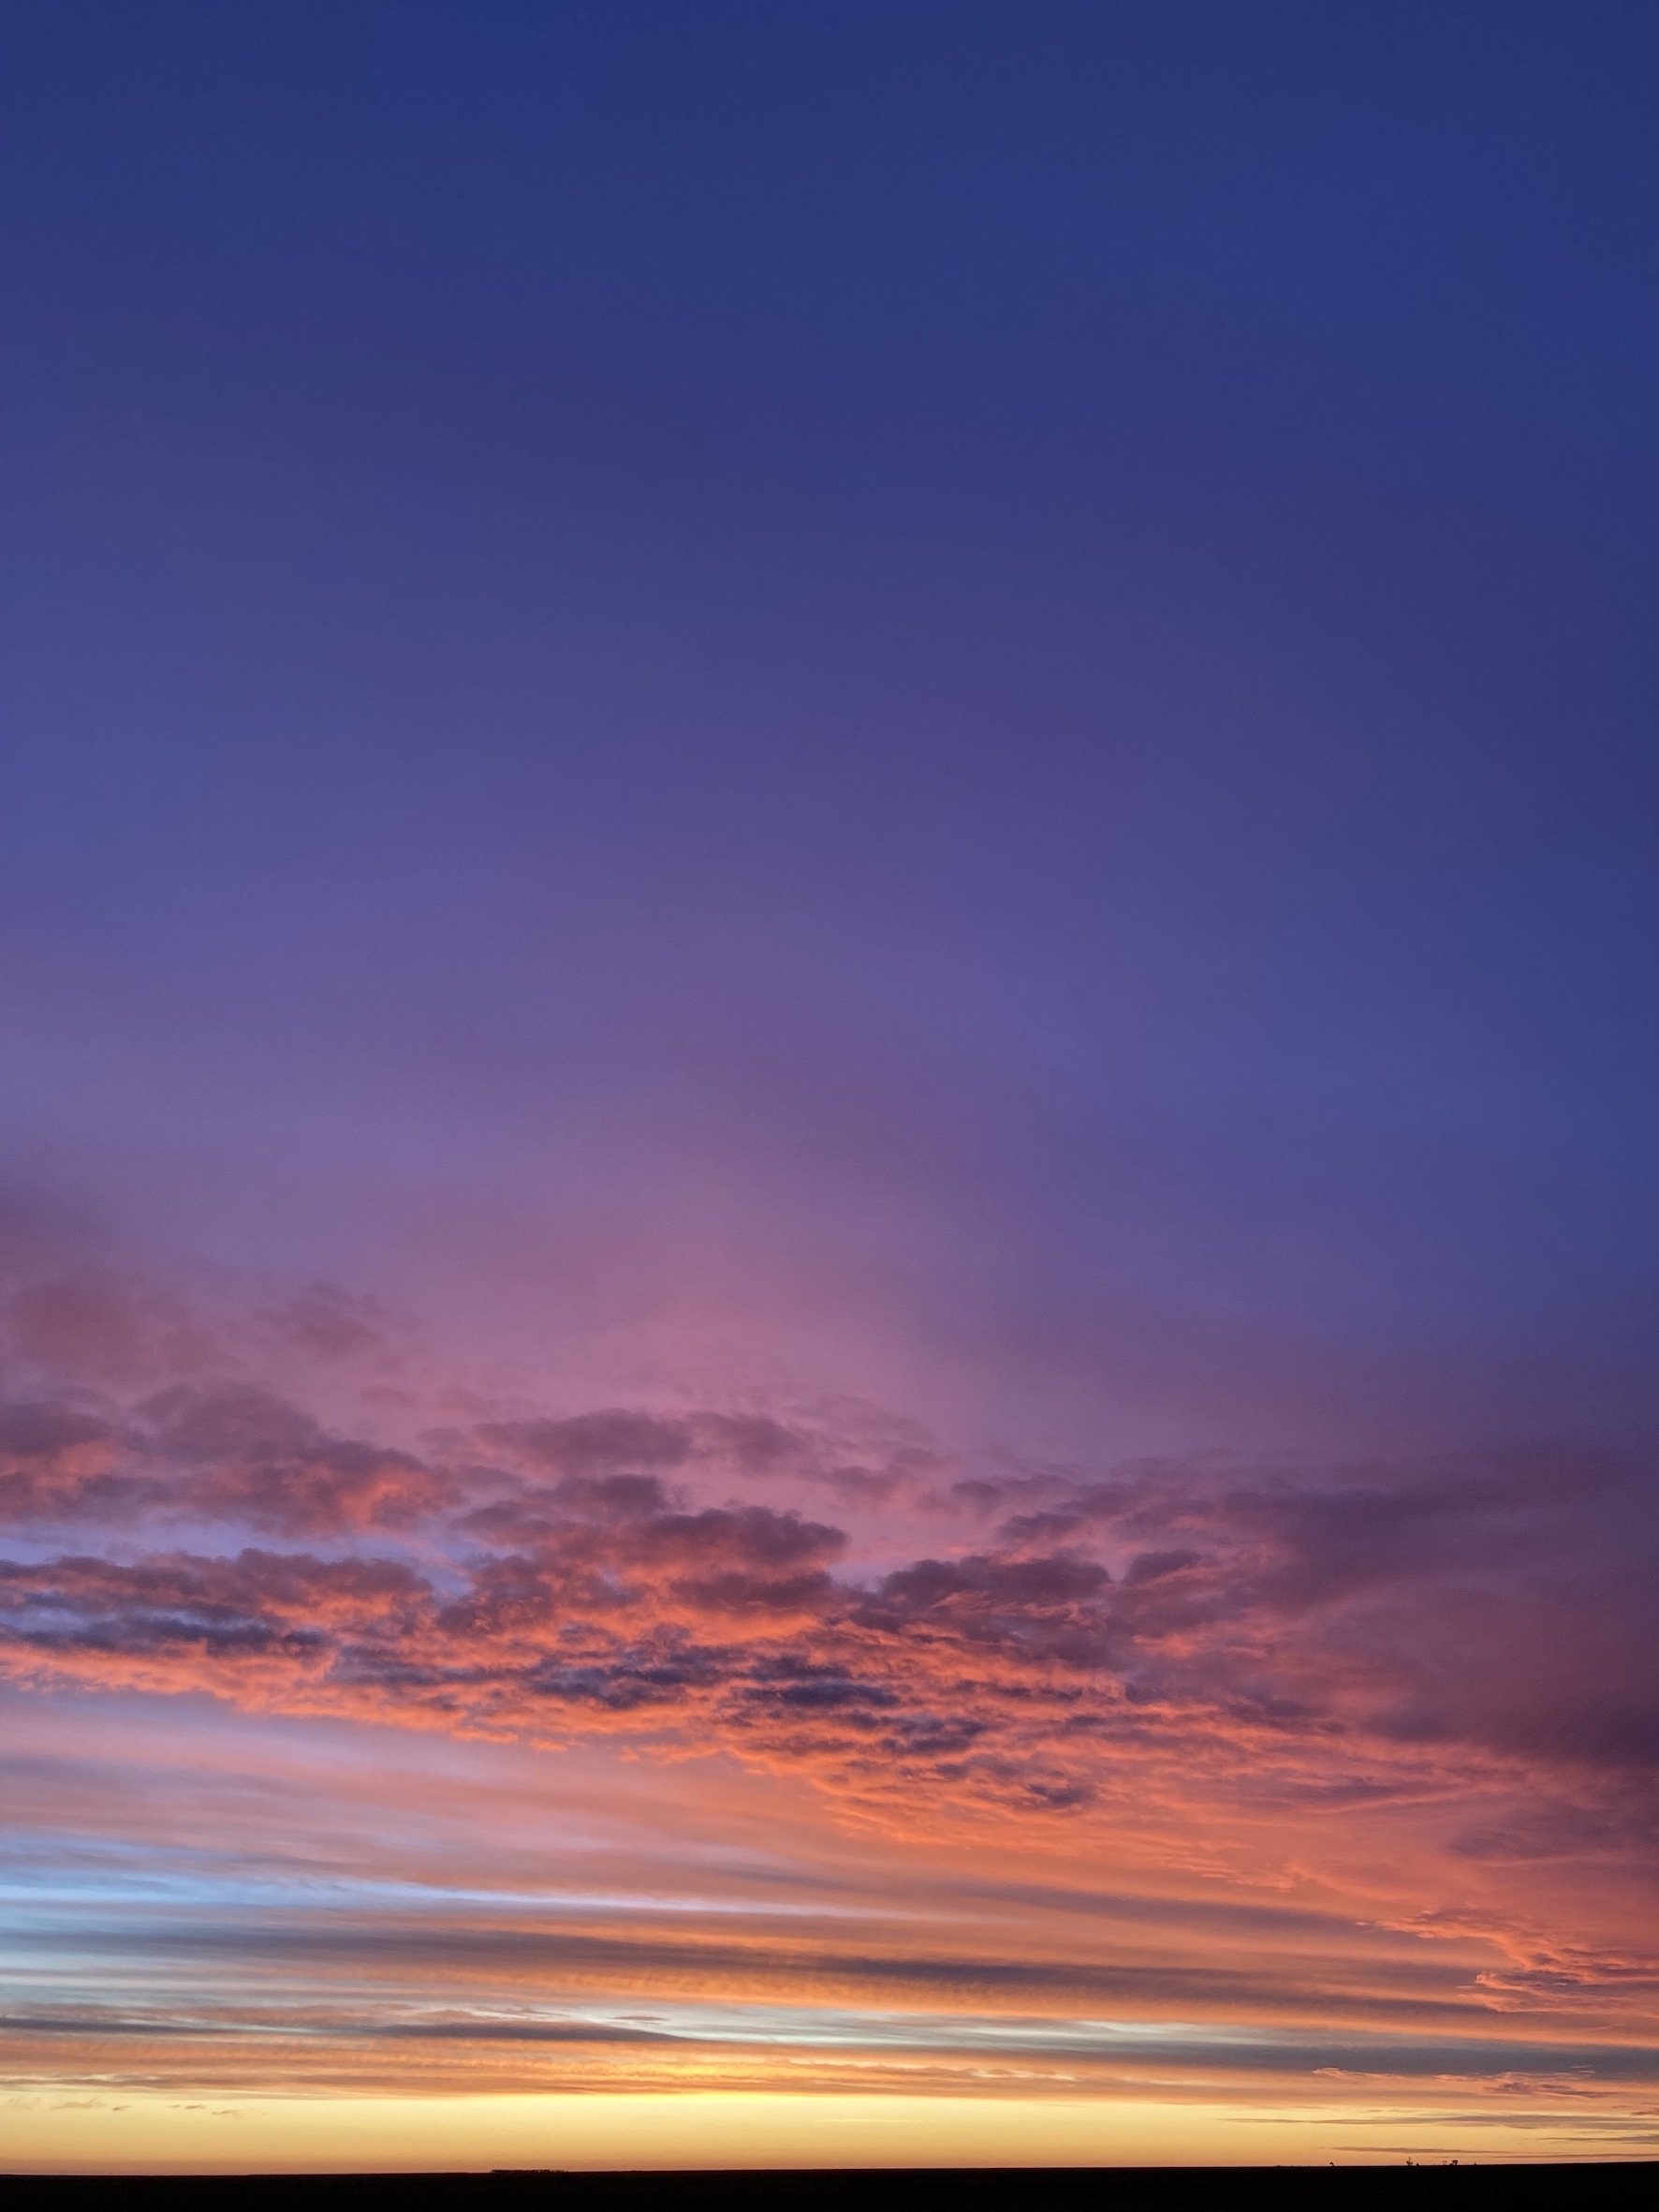 Hay Sunset pinks_low res.jpg